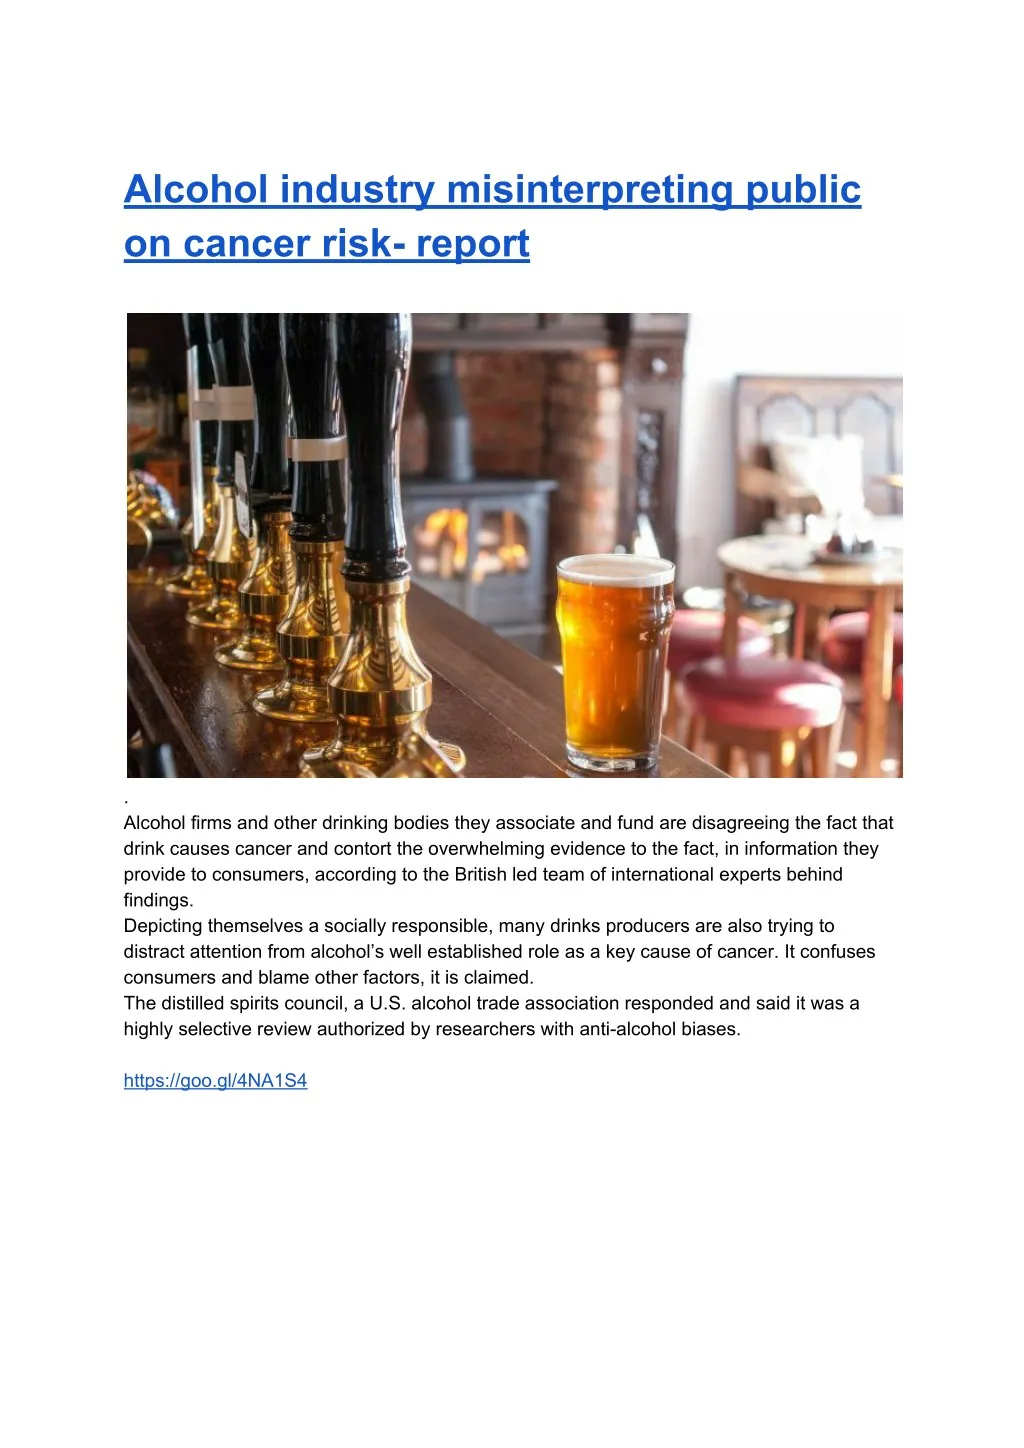 alcohol industry misinterpreting public on cancer